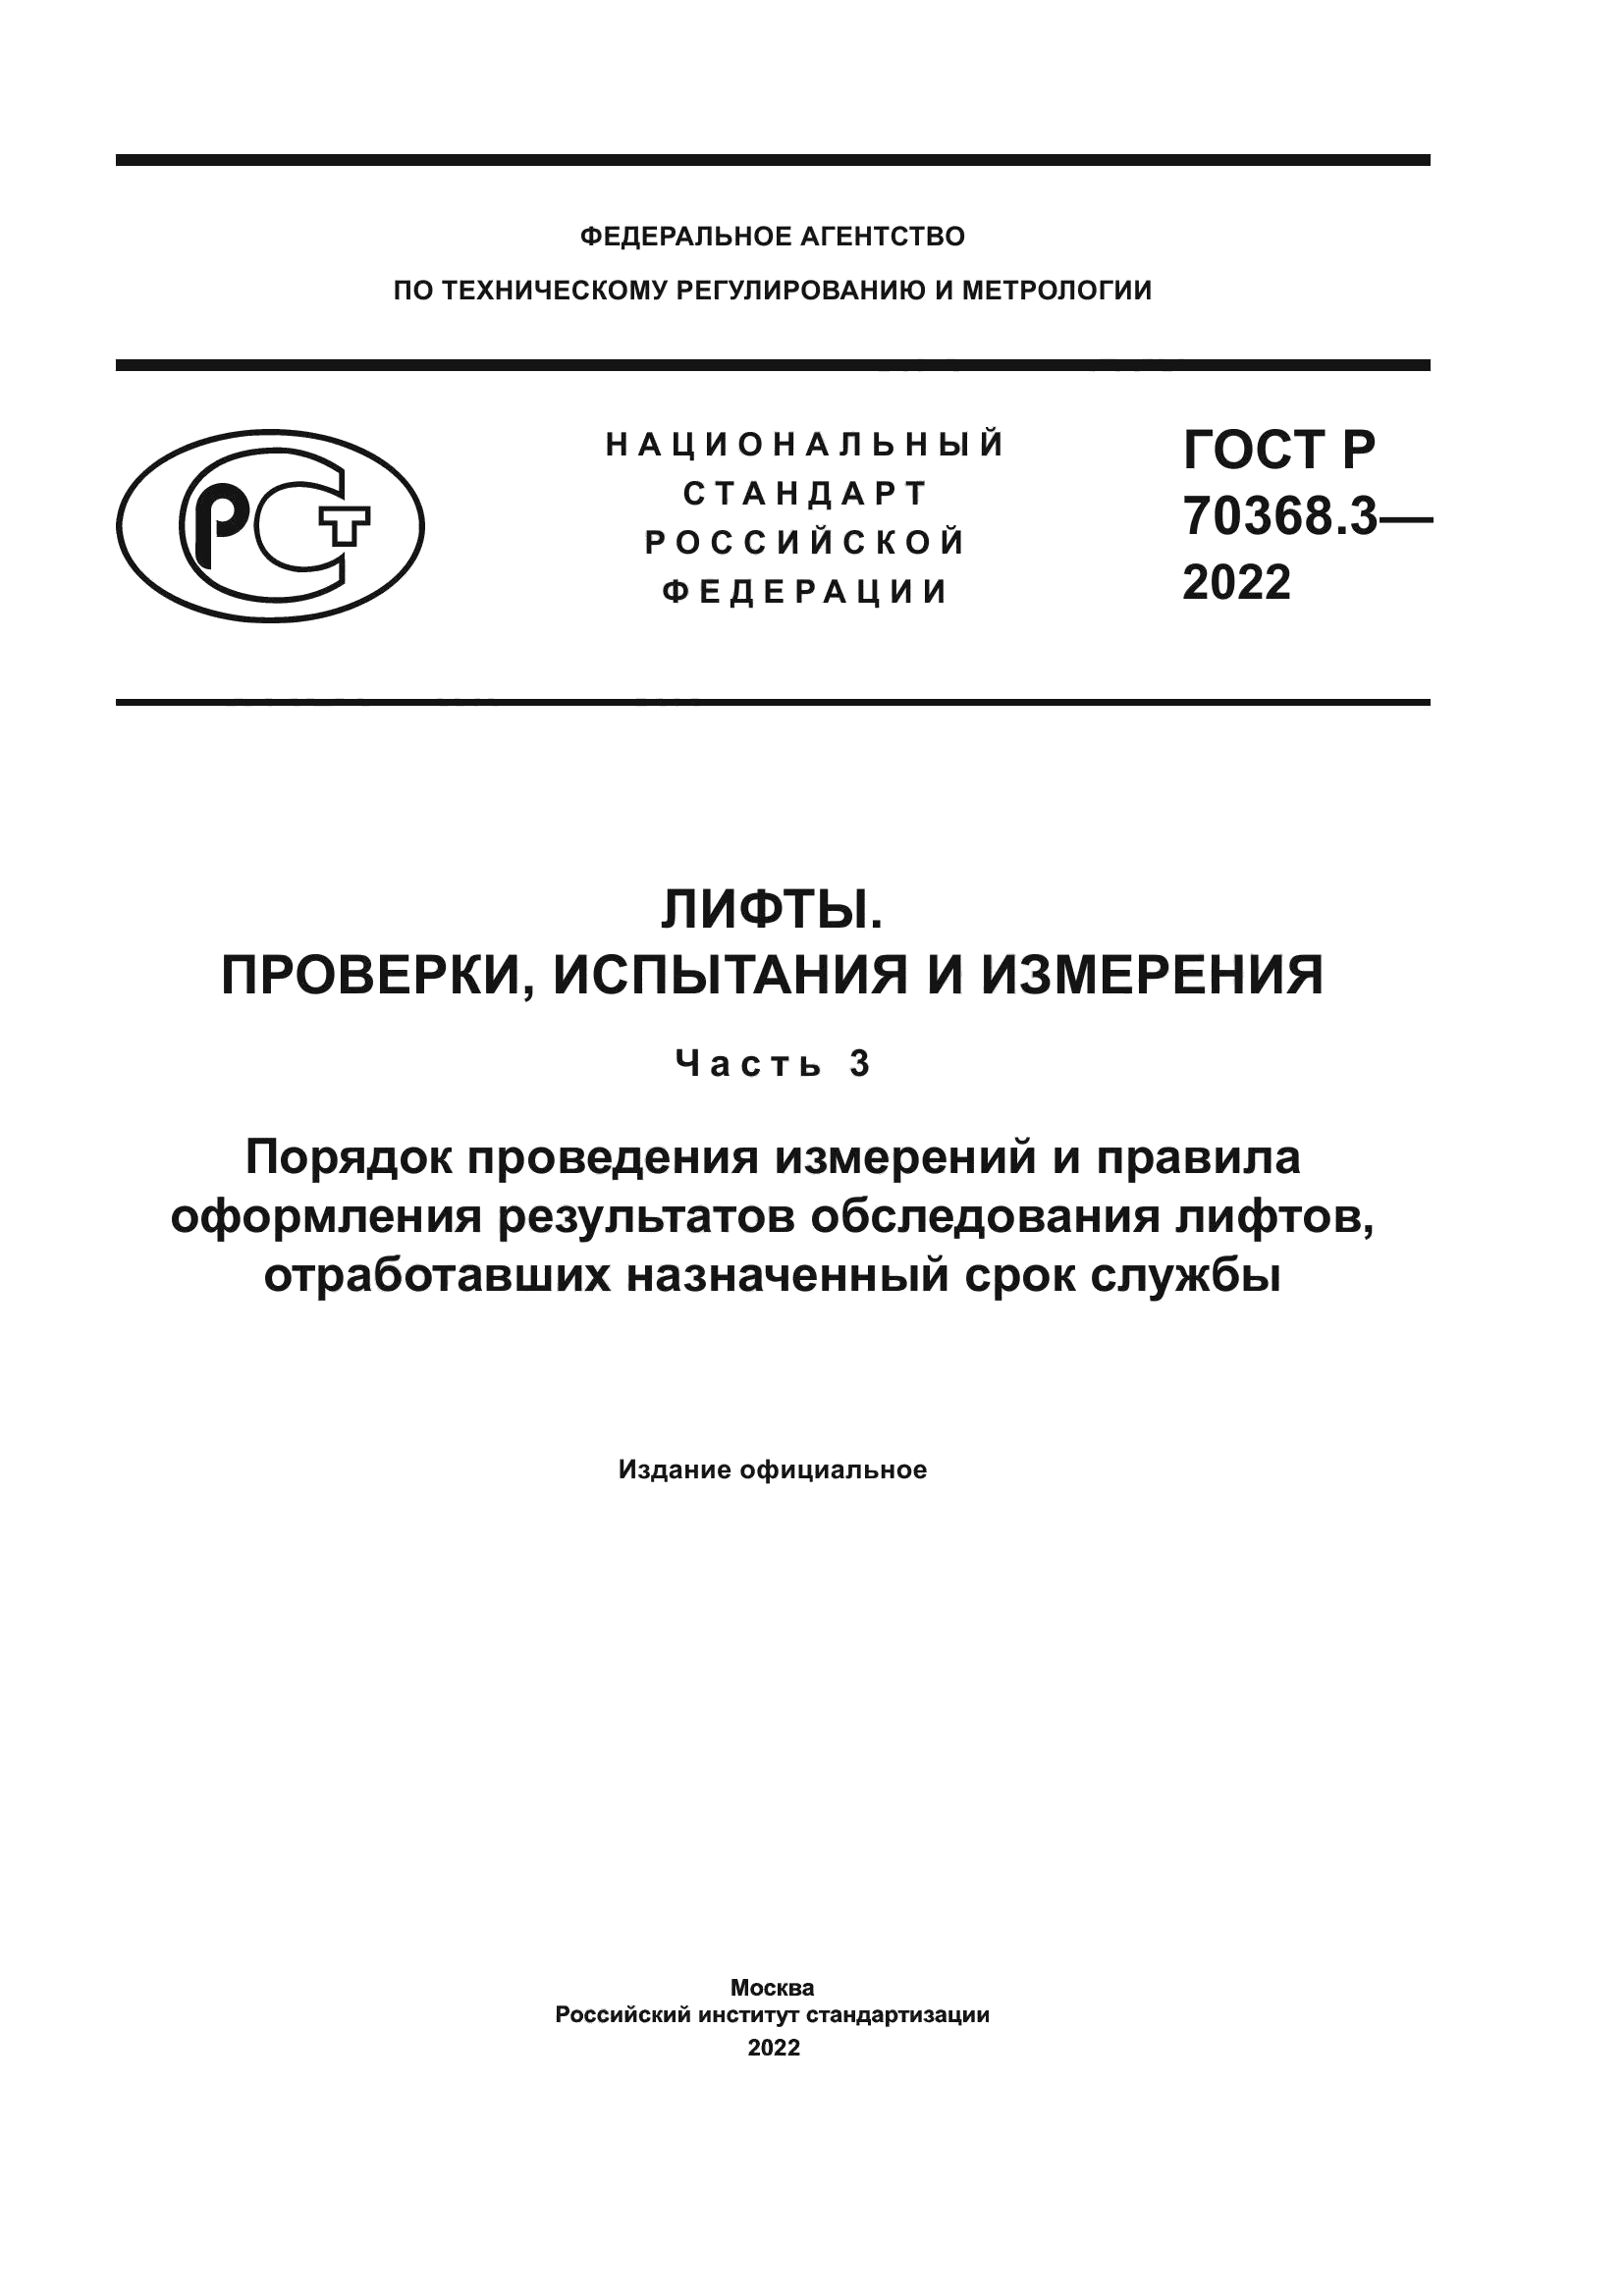 ГОСТ Р 70368.3-2022